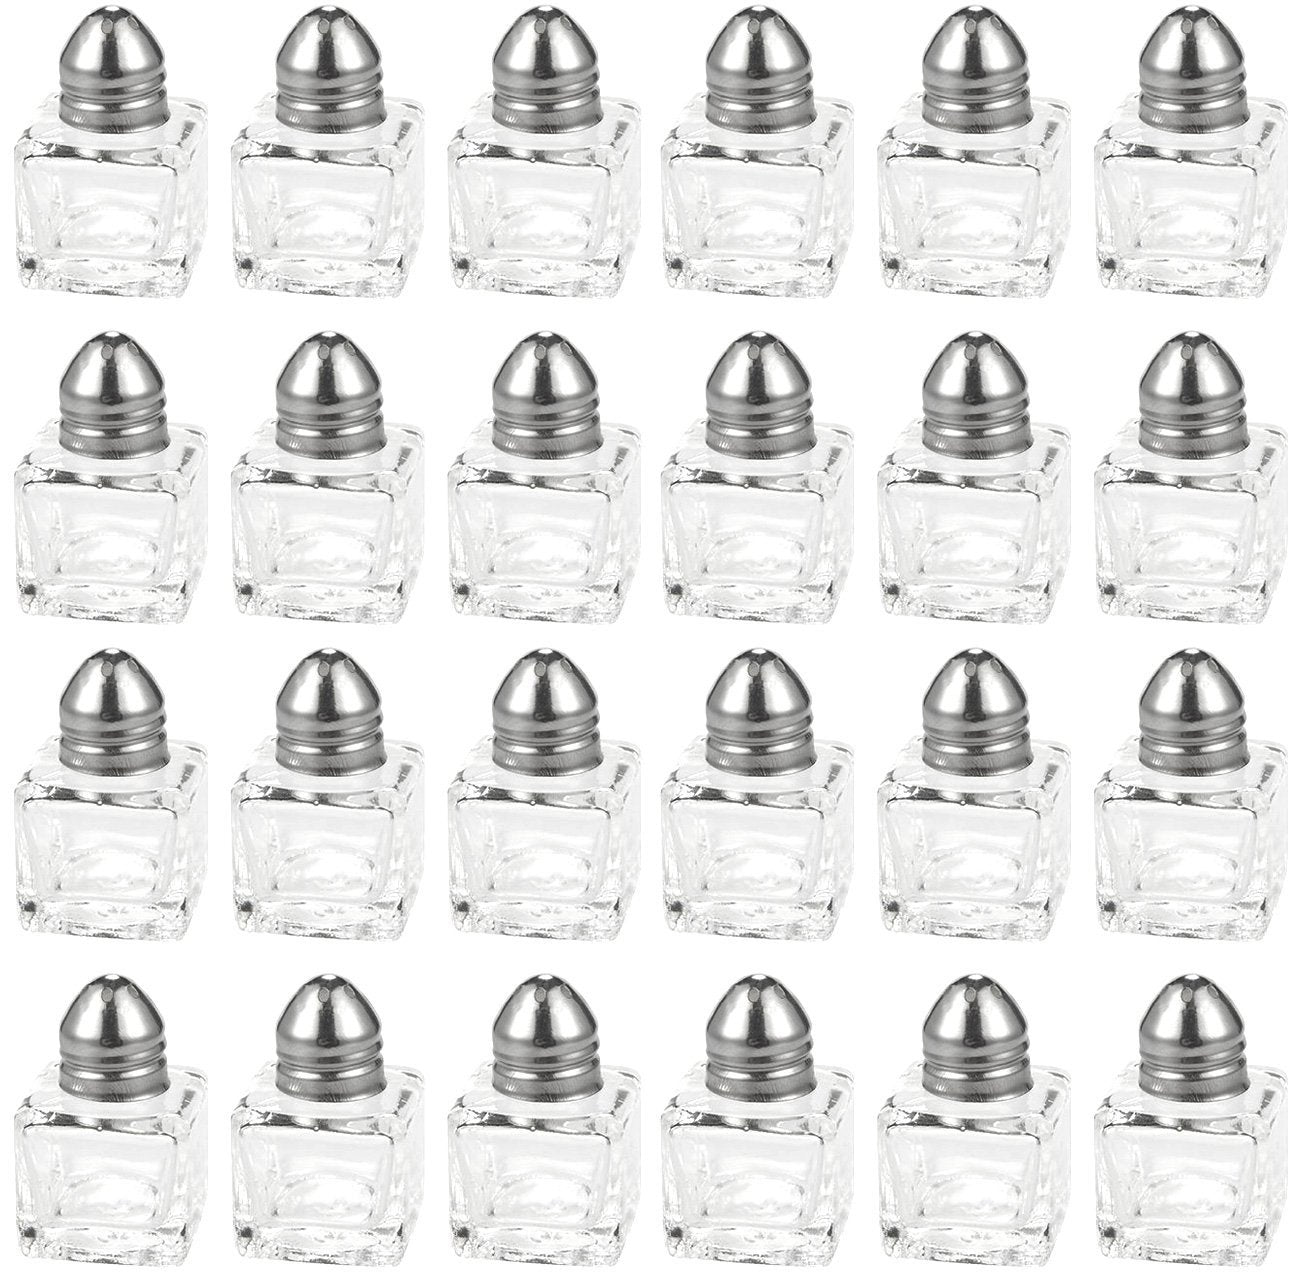 Salt and Pepper Shakers Set - 24-Piece Set of Salt Pepper Shakers